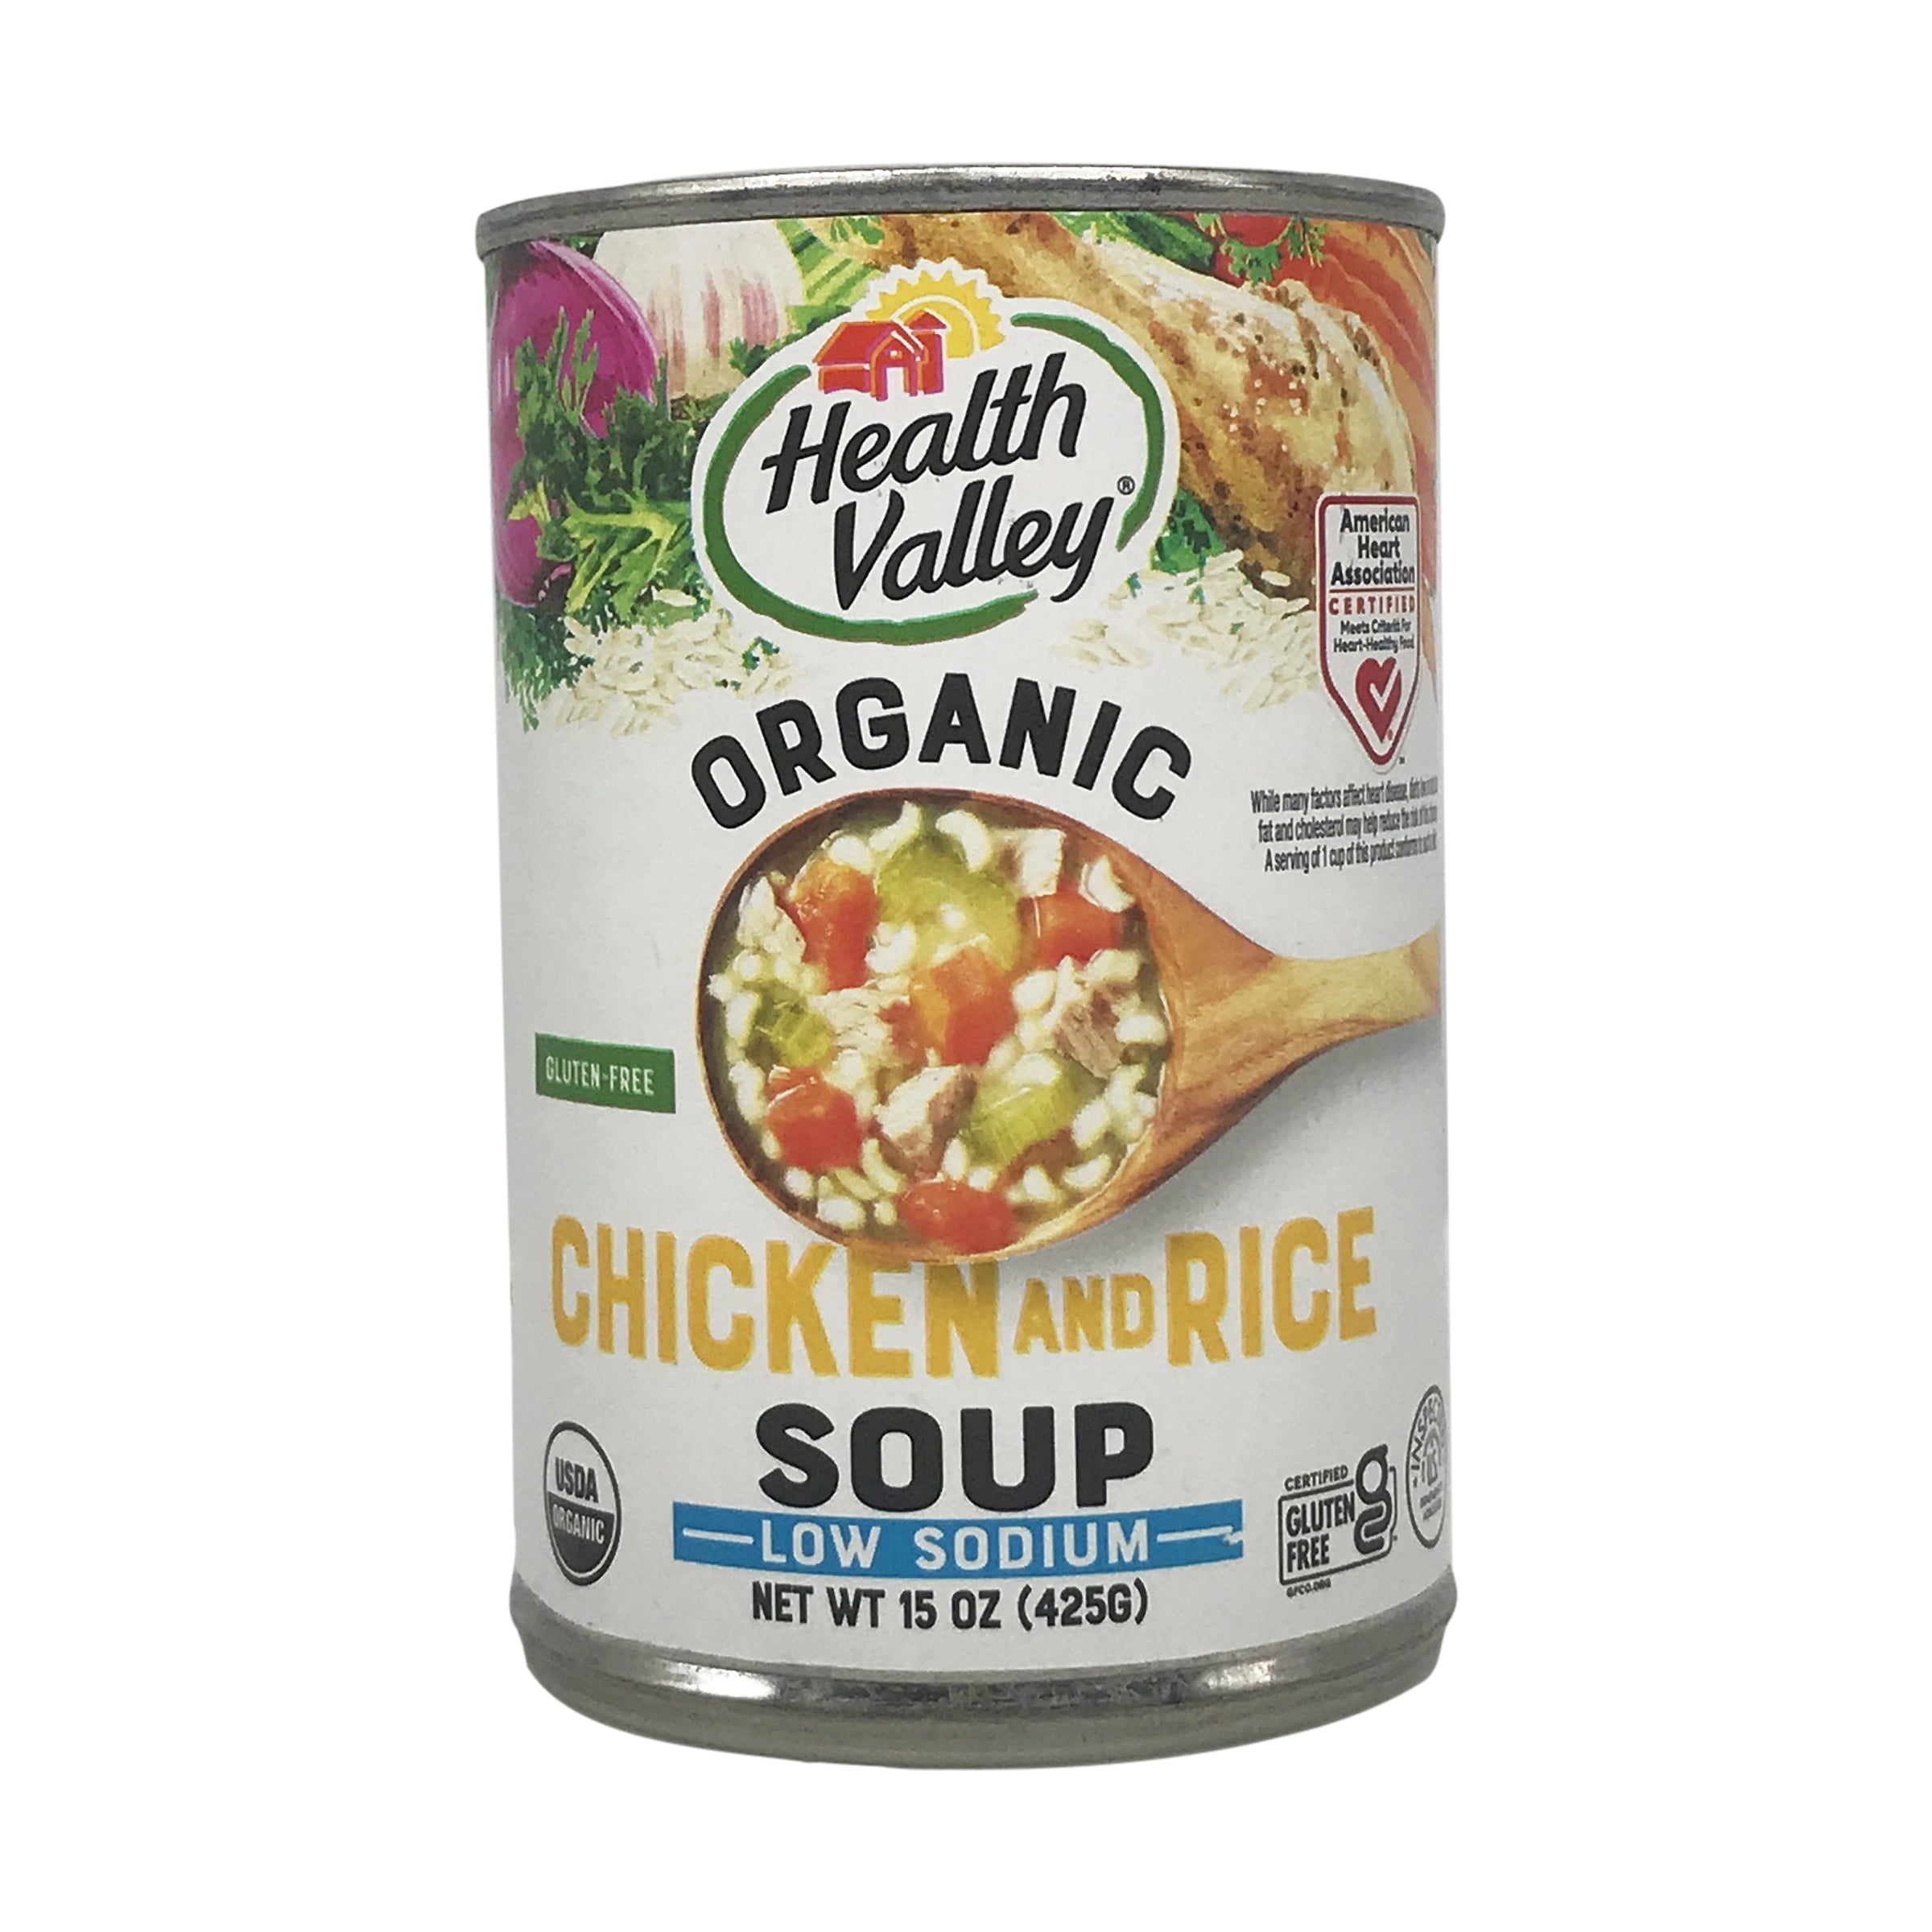 Health Valley Vegetable No Salt Added Soup-15 oz. - Healthy Heart